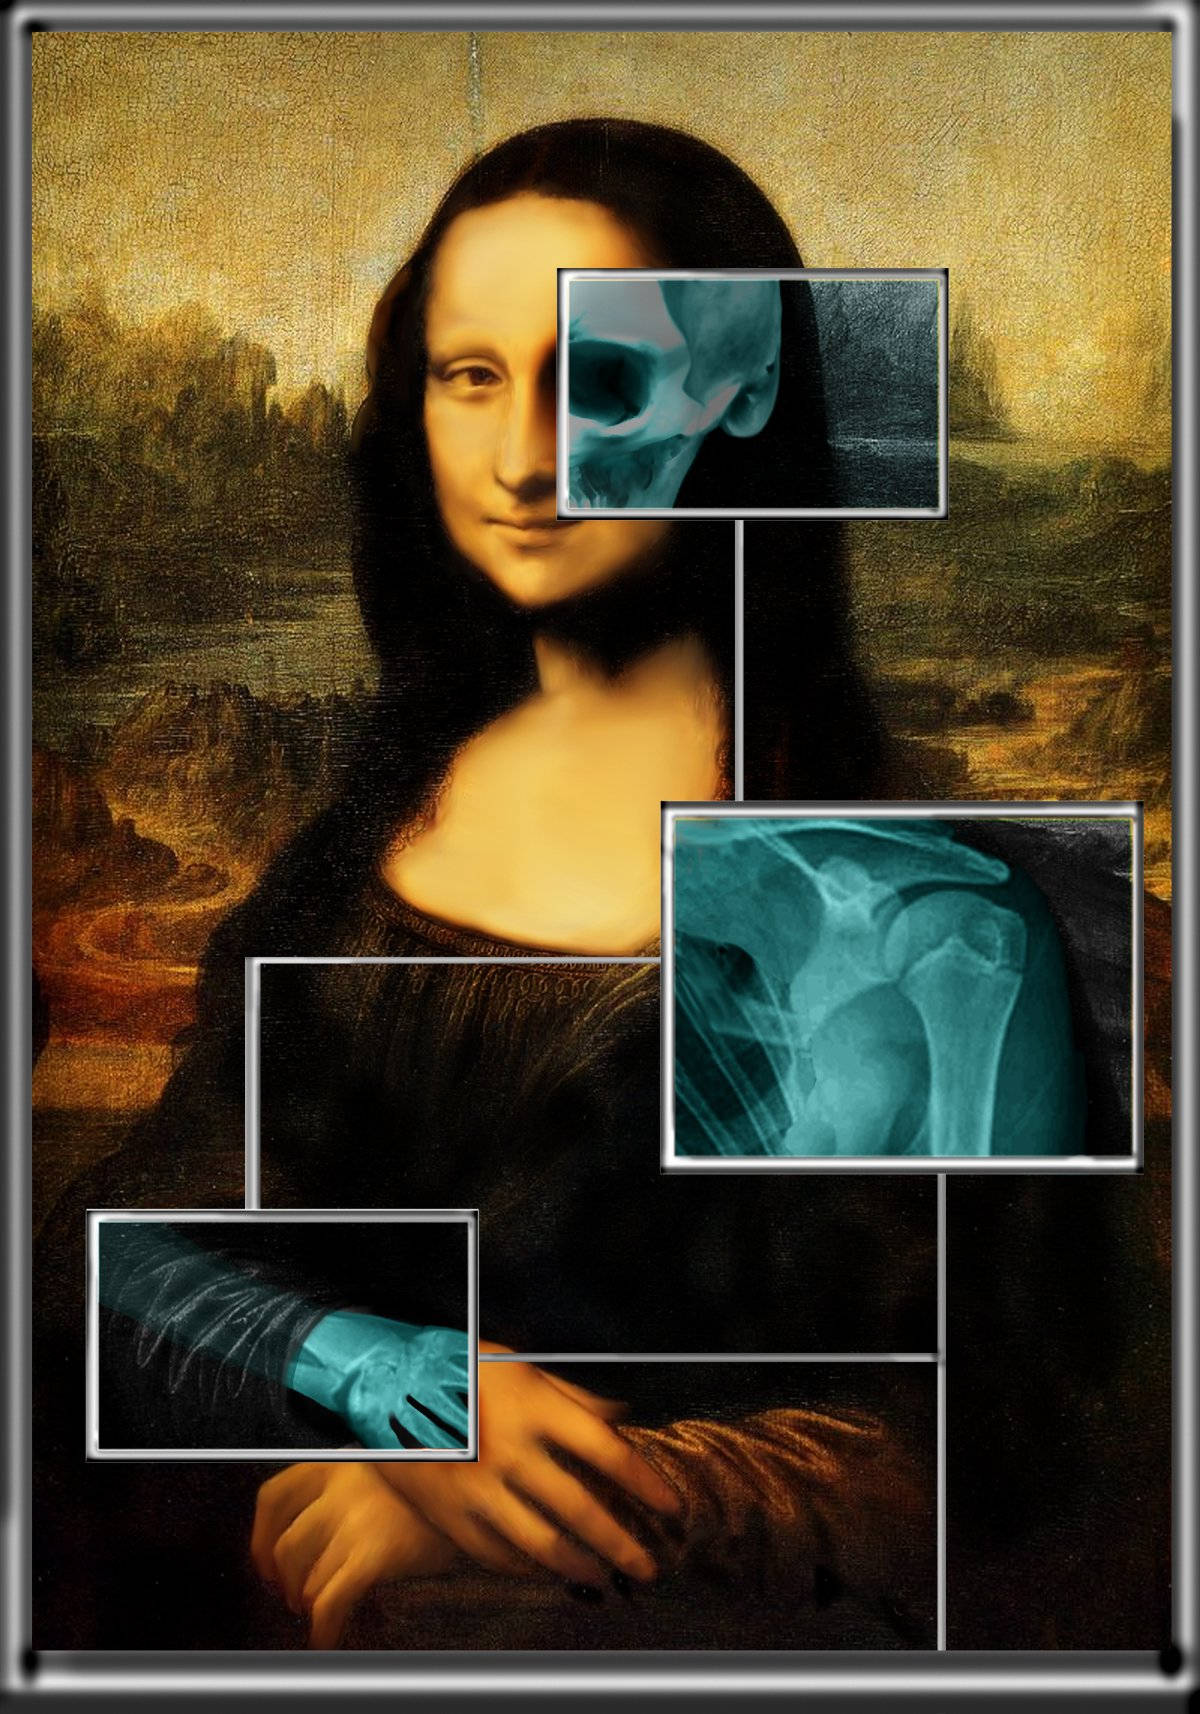 Mona Lisa Wallpaper Full HD, 4K Free to Use